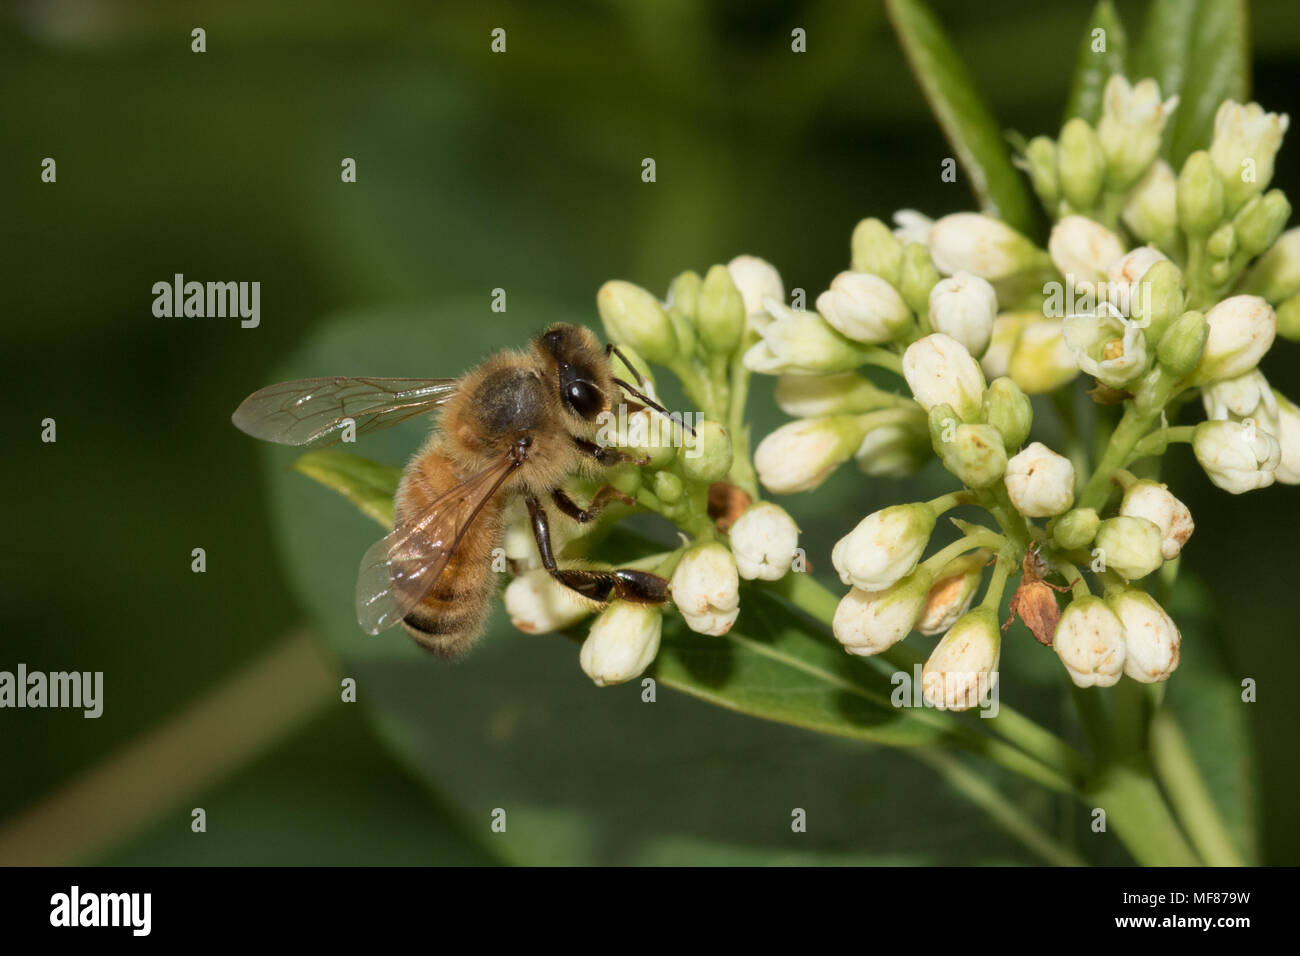 Puntura D'ape Immagini e Fotos Stock - Alamy